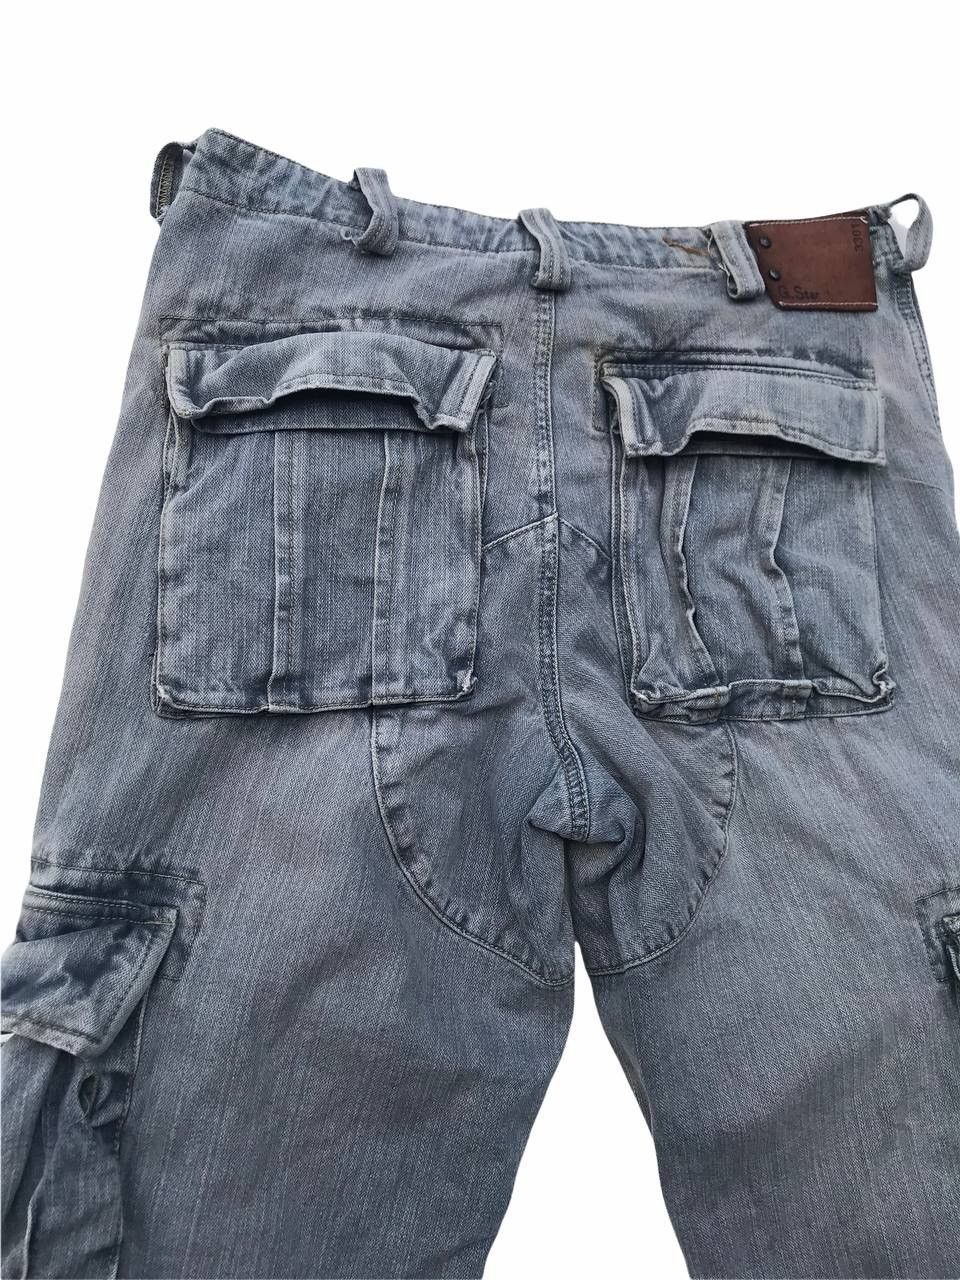 Gstar Gstar Denim Cargo Multipocket Streetwear Fashion Pants Size US 31 - 14 Thumbnail